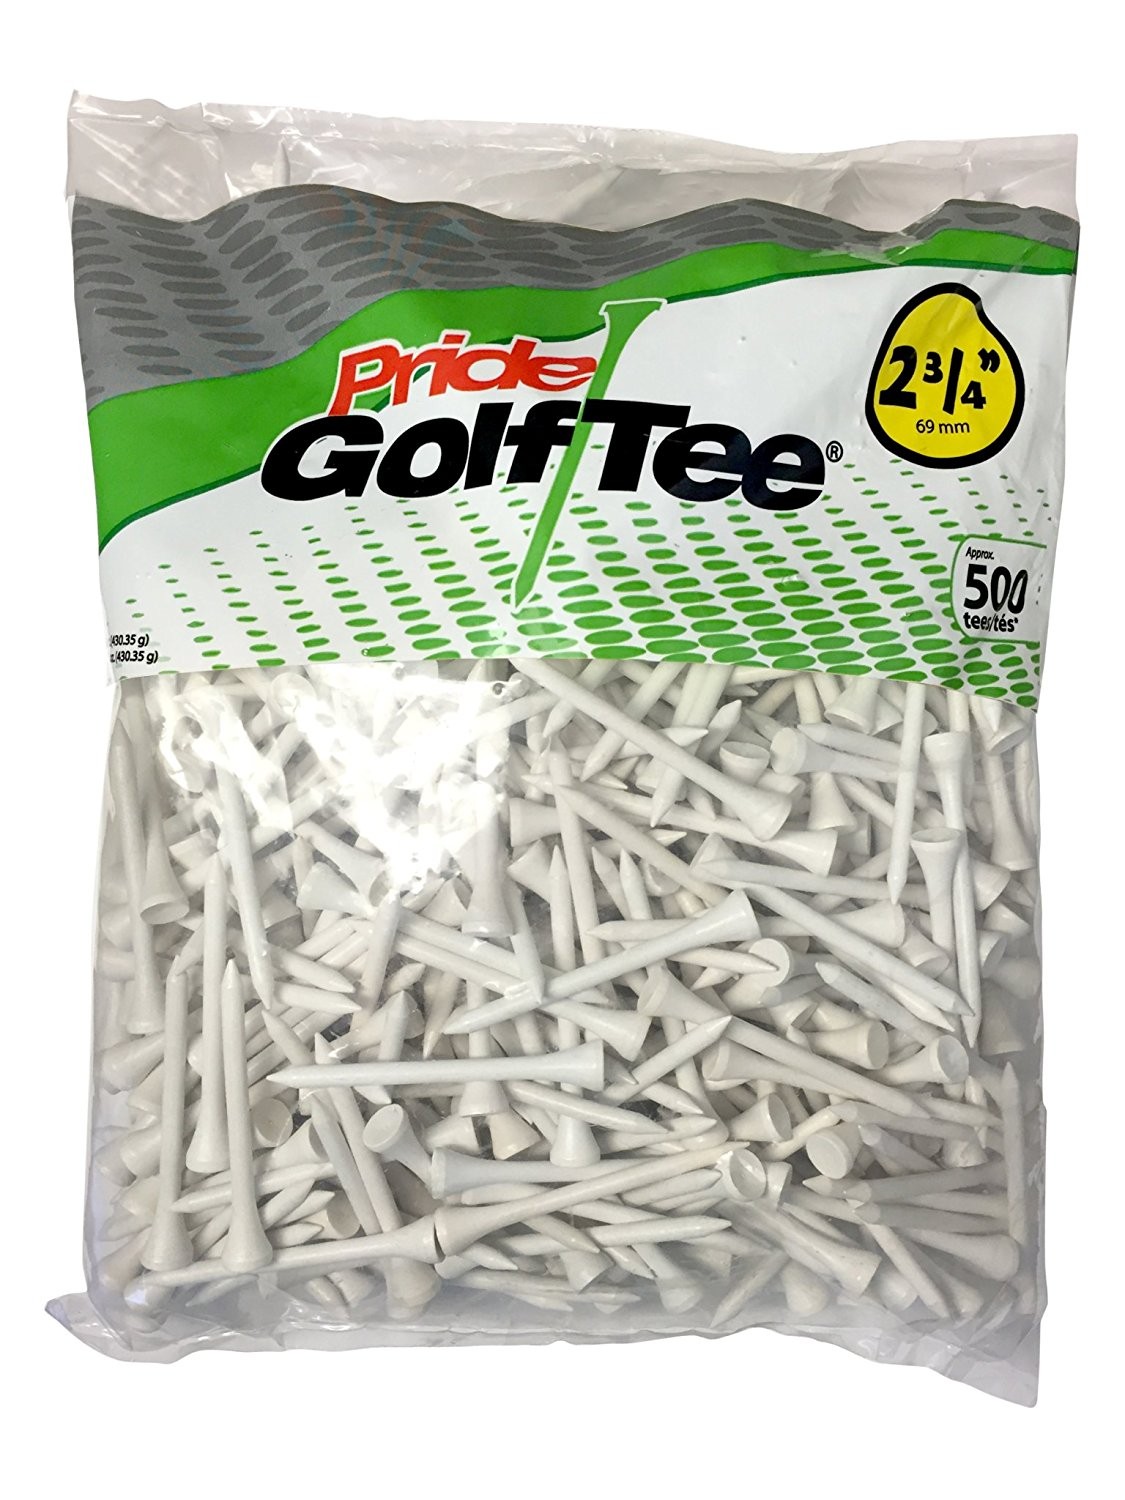 500 Count Bag 2 3/4" Golf Tees